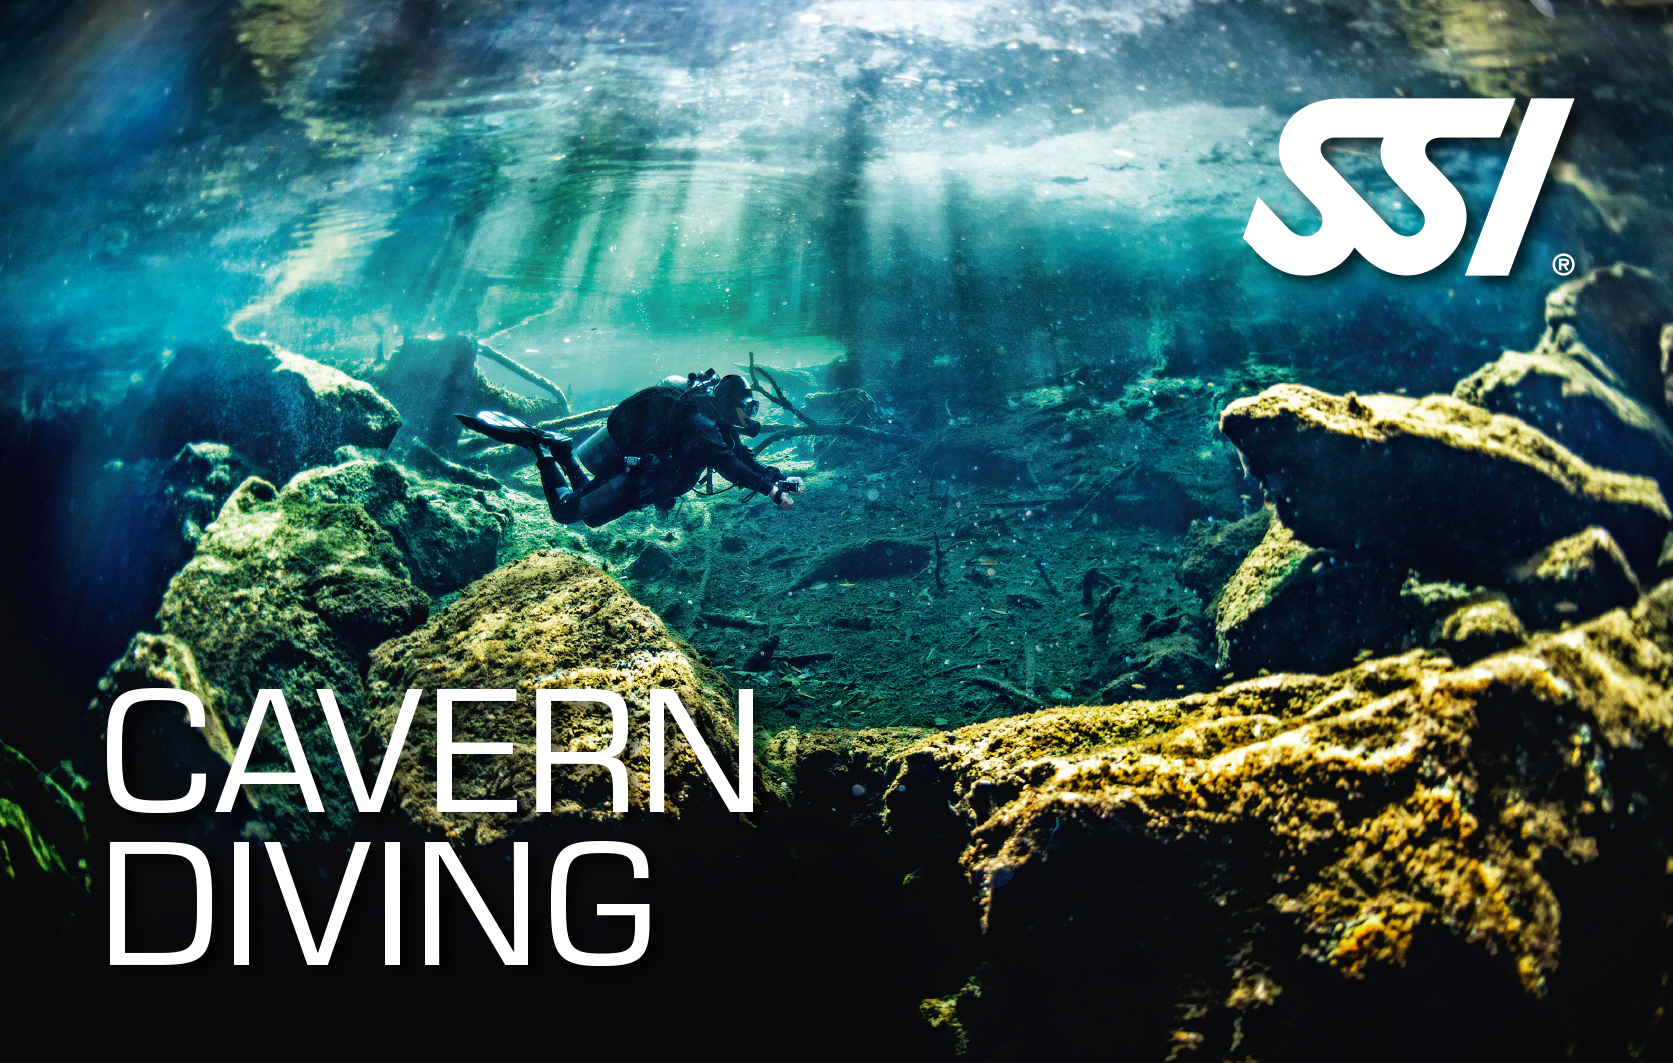 ssi-cavern-diving-kurs